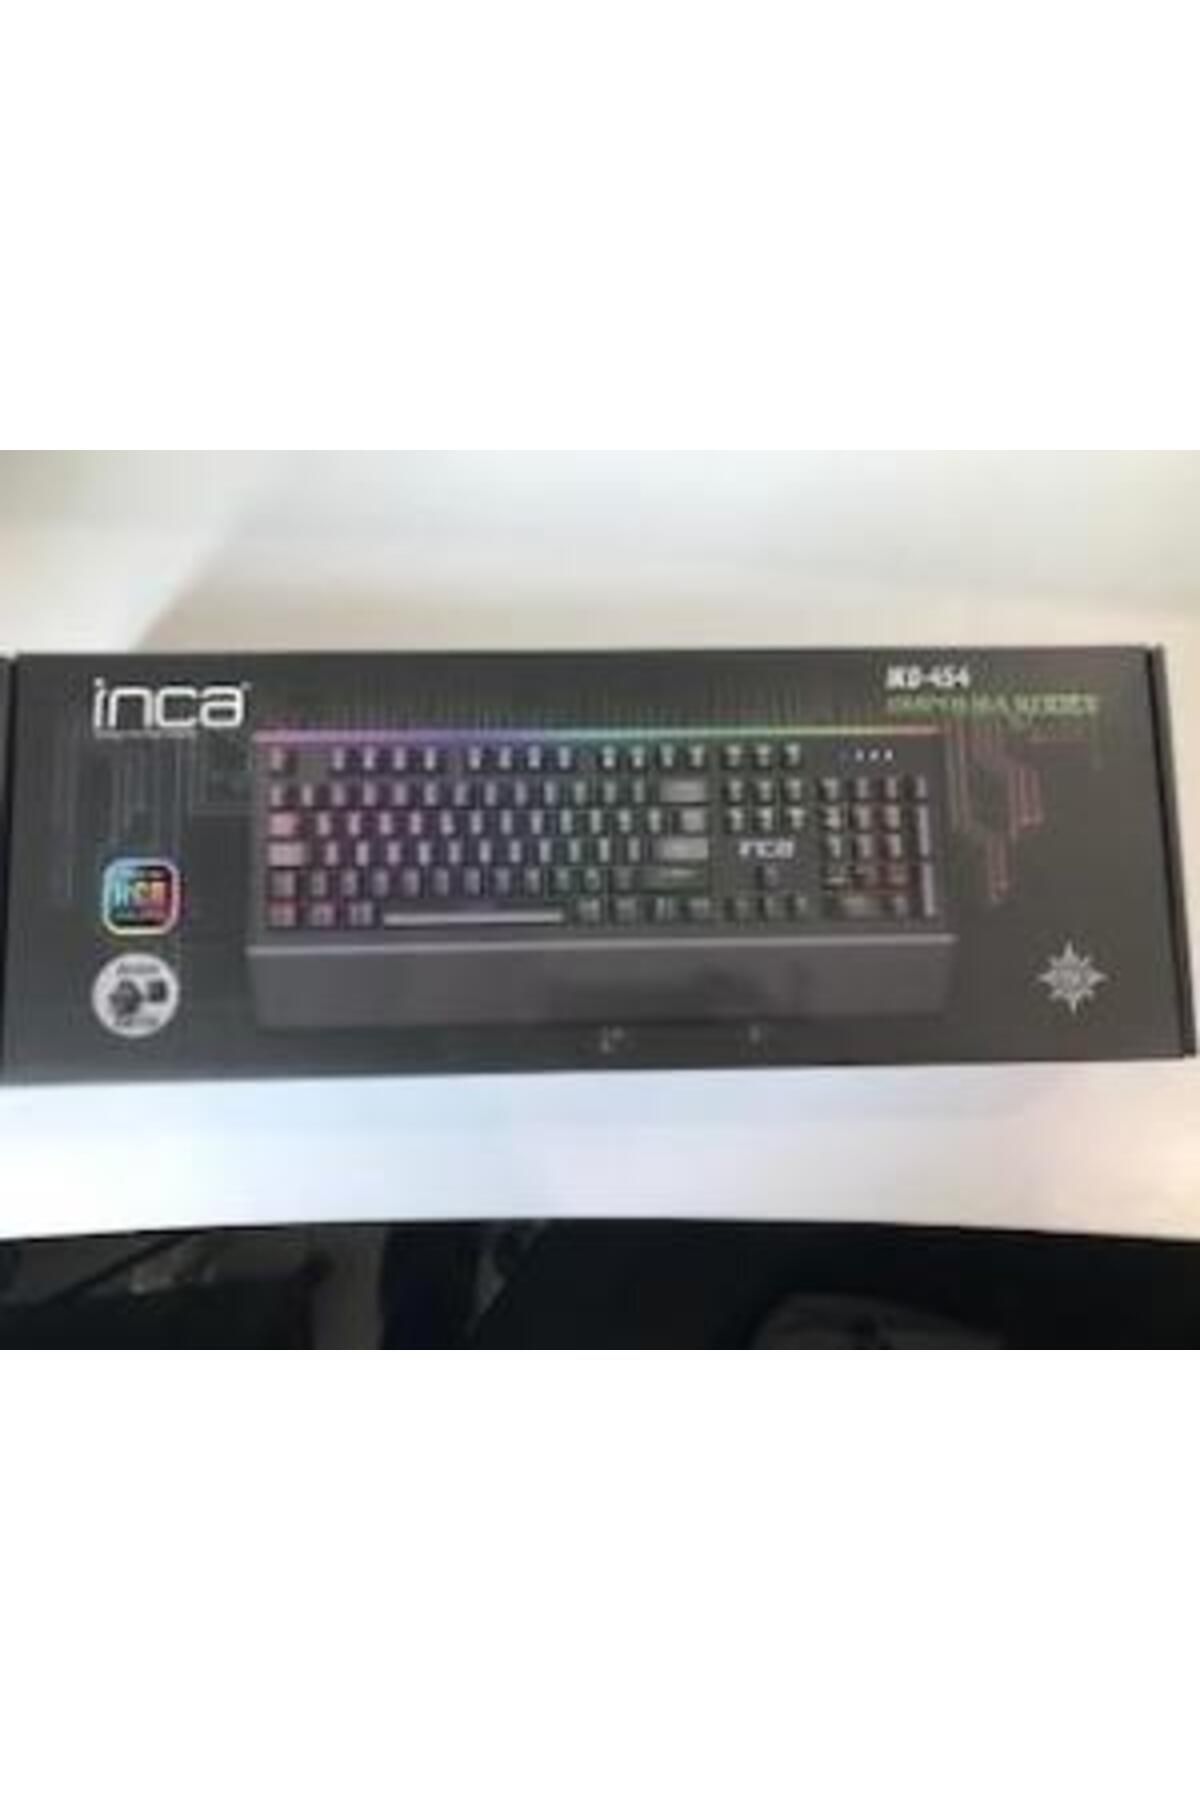 Inca Ikg-454 Full Rgb Empousaıı Mechanıcal Gaming Keyboard